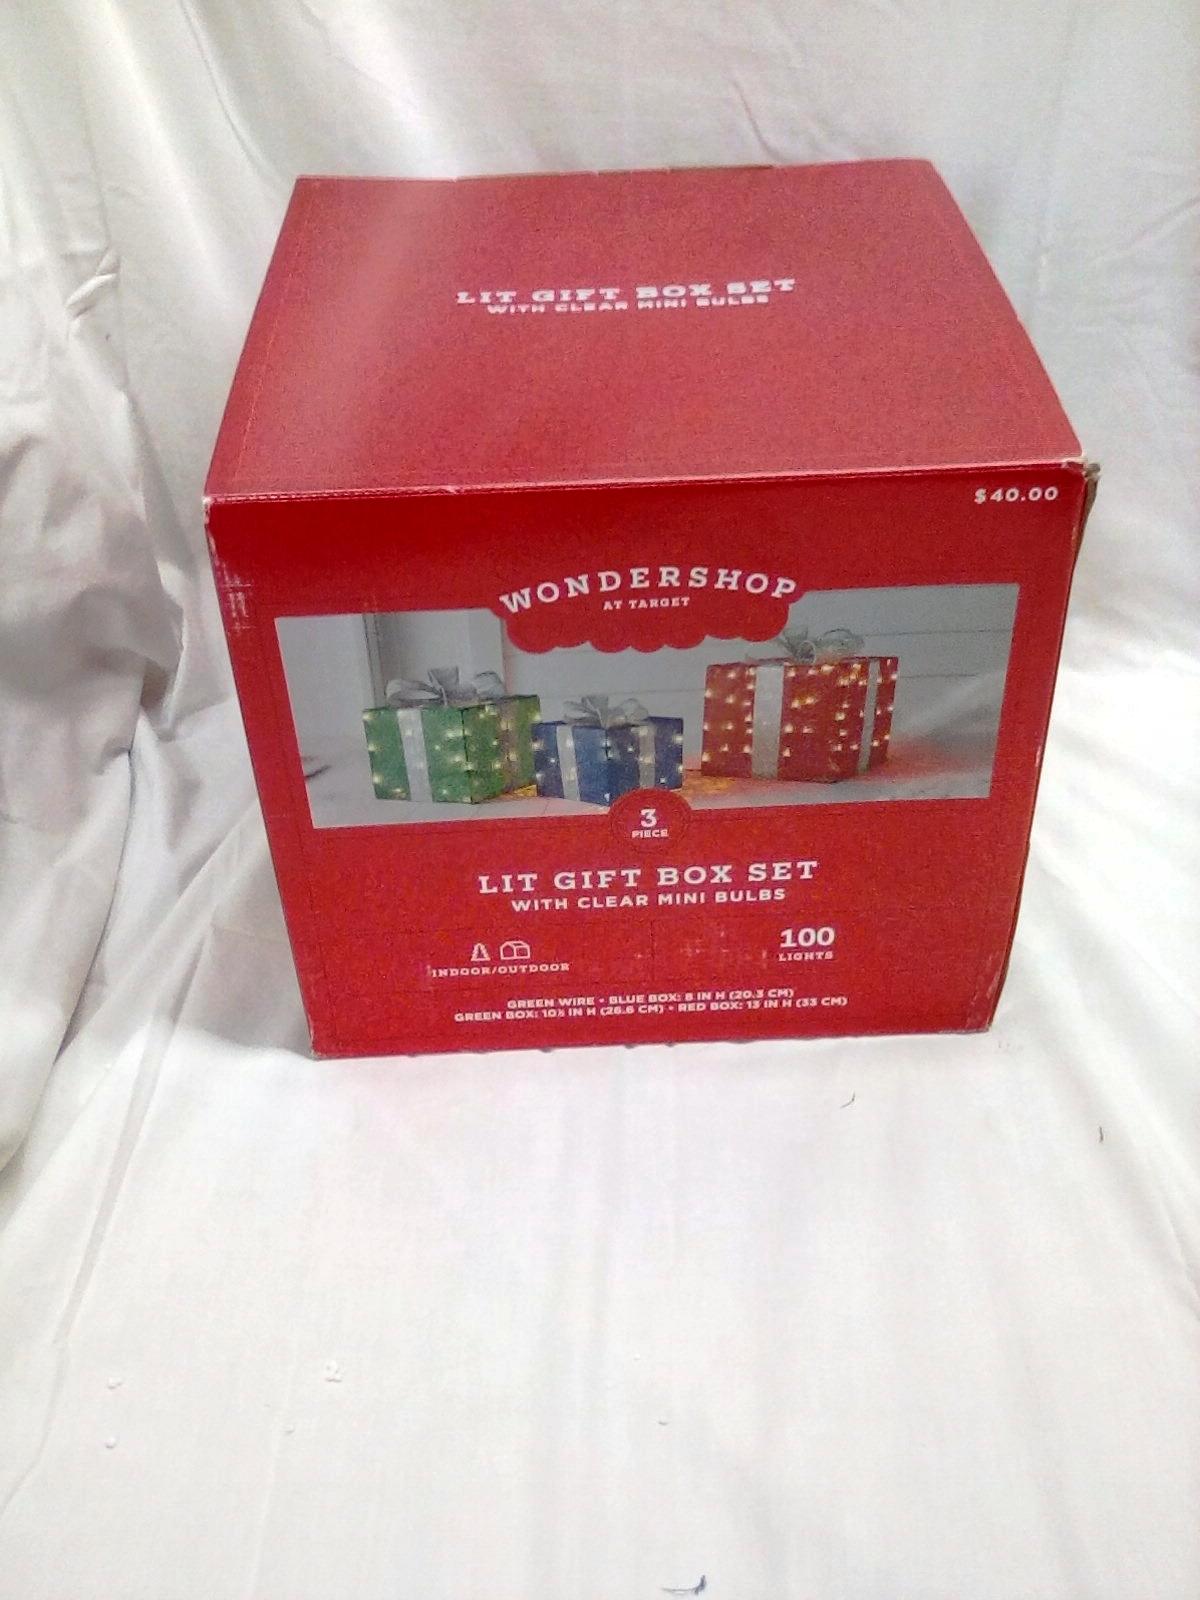 Wondershop 3 piece Lit Gift Box Set